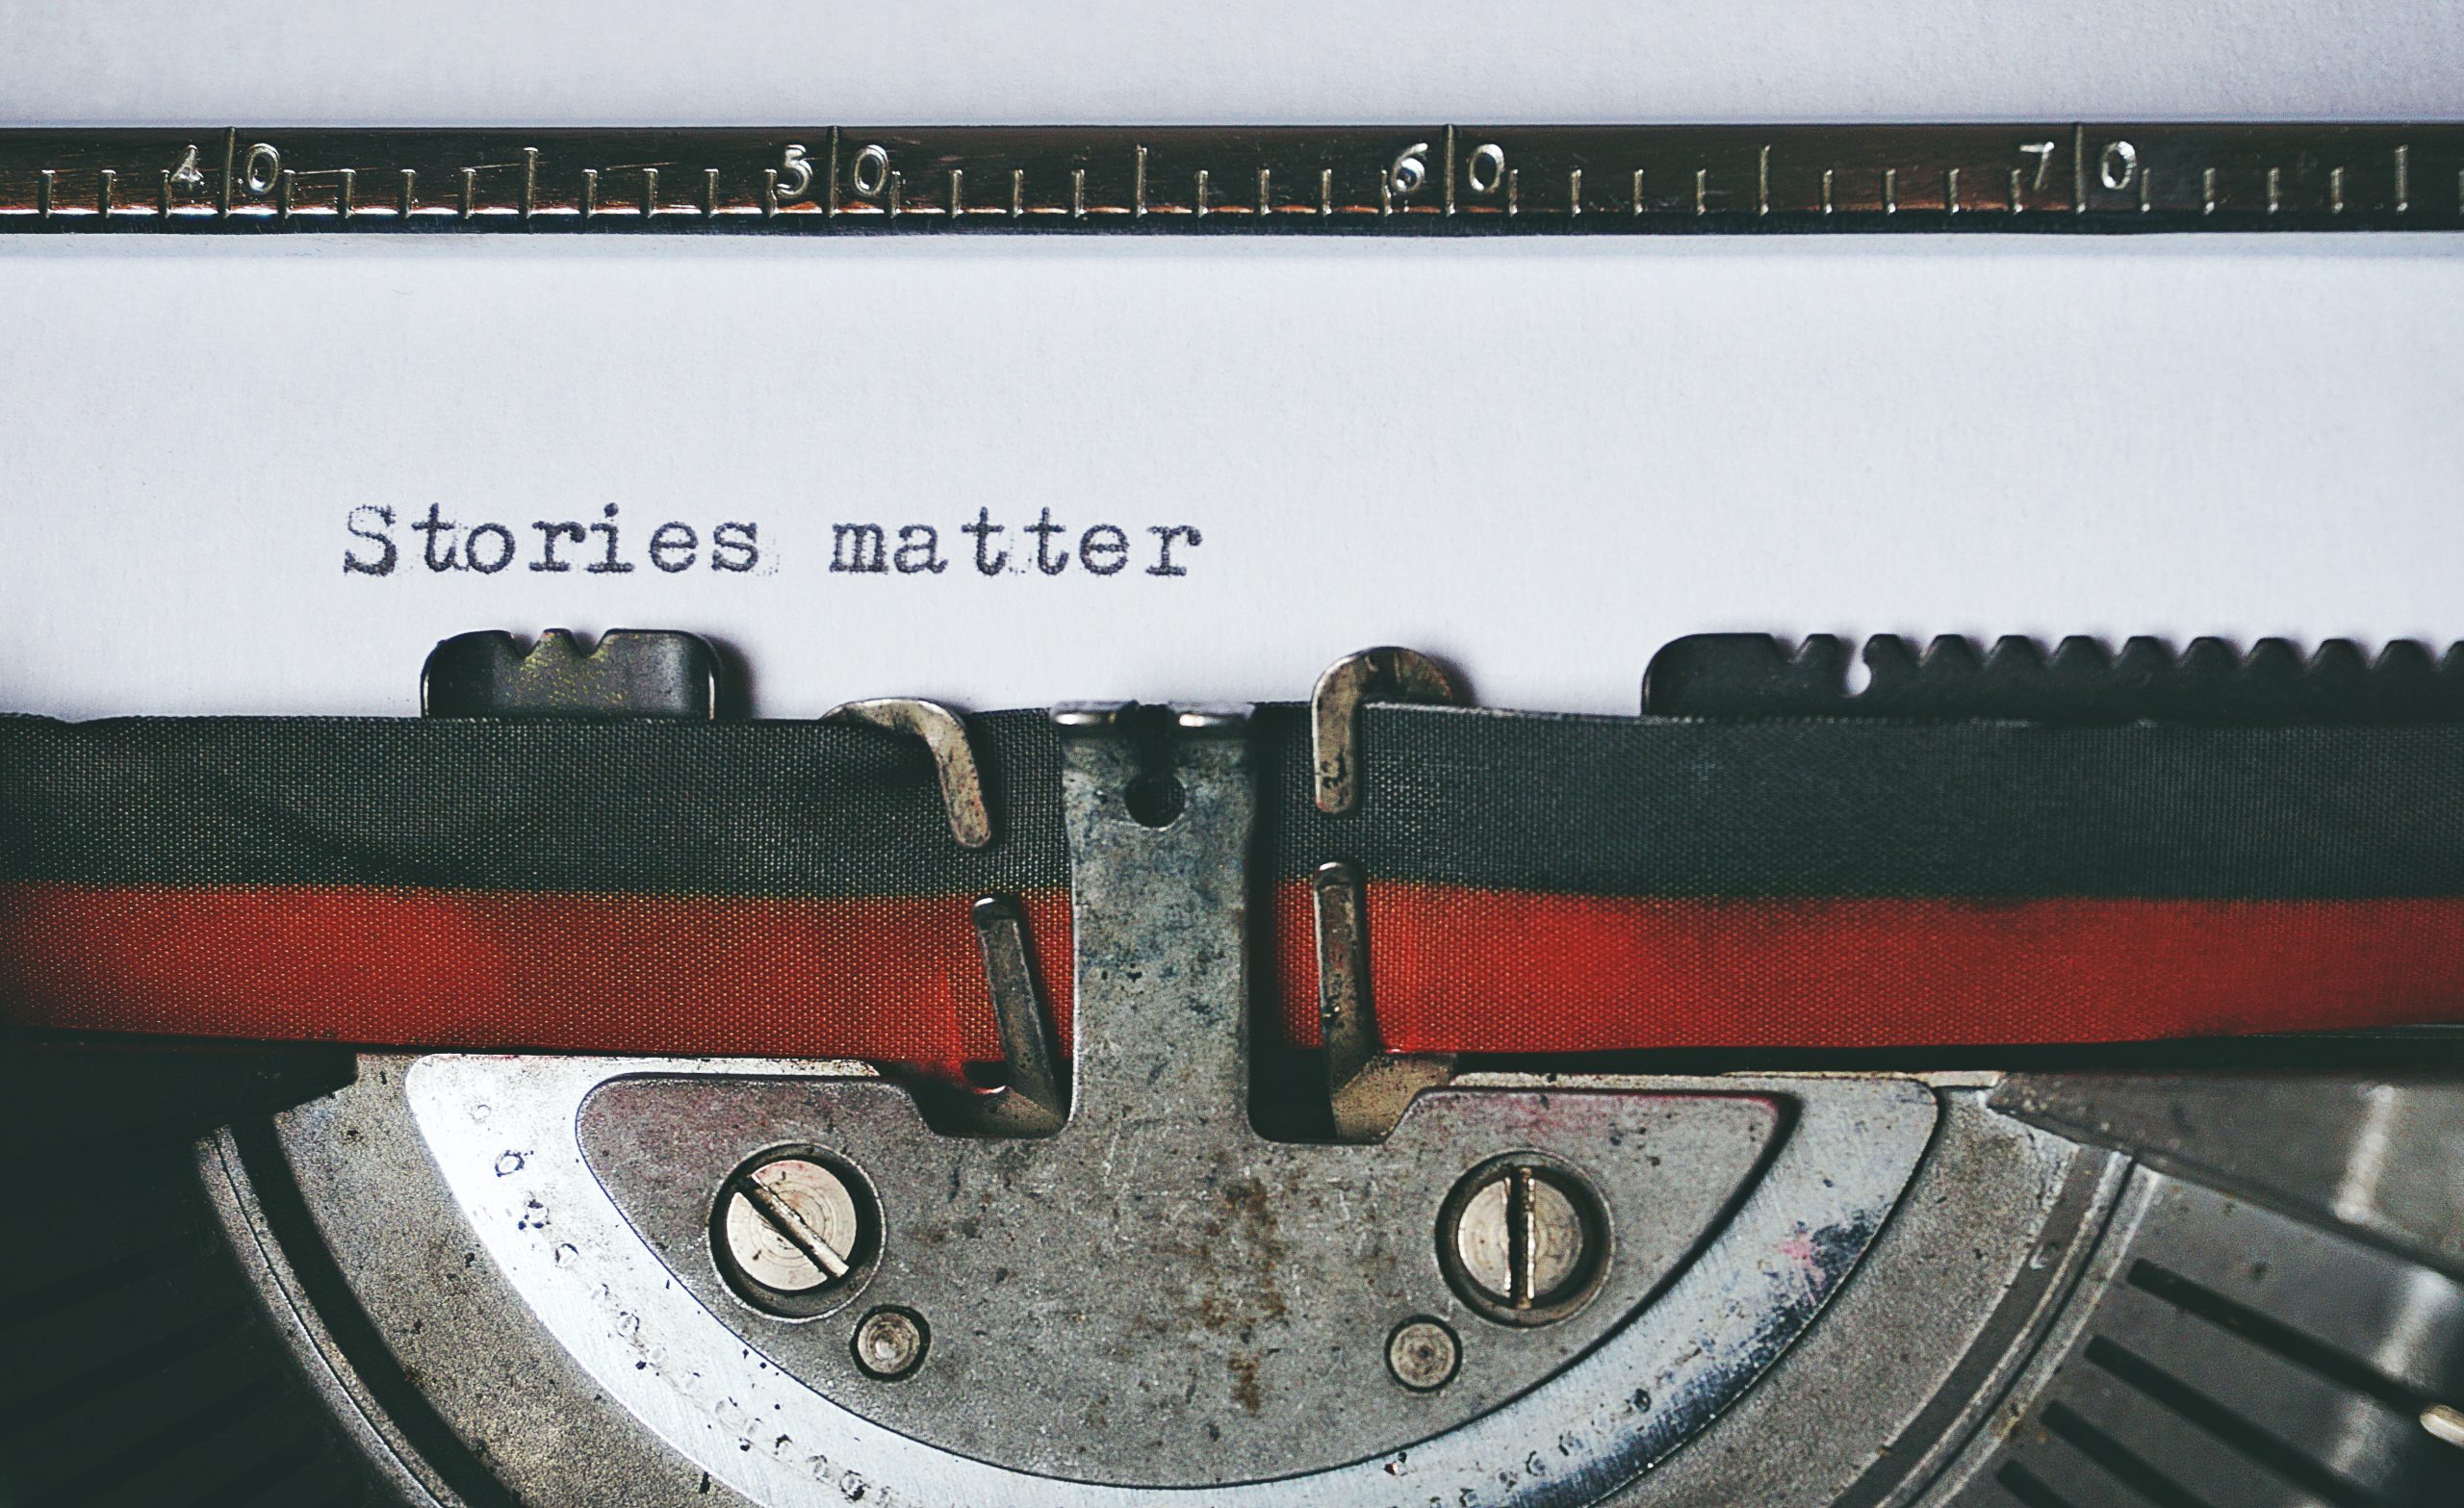 'Stories matter' text on a typewriter